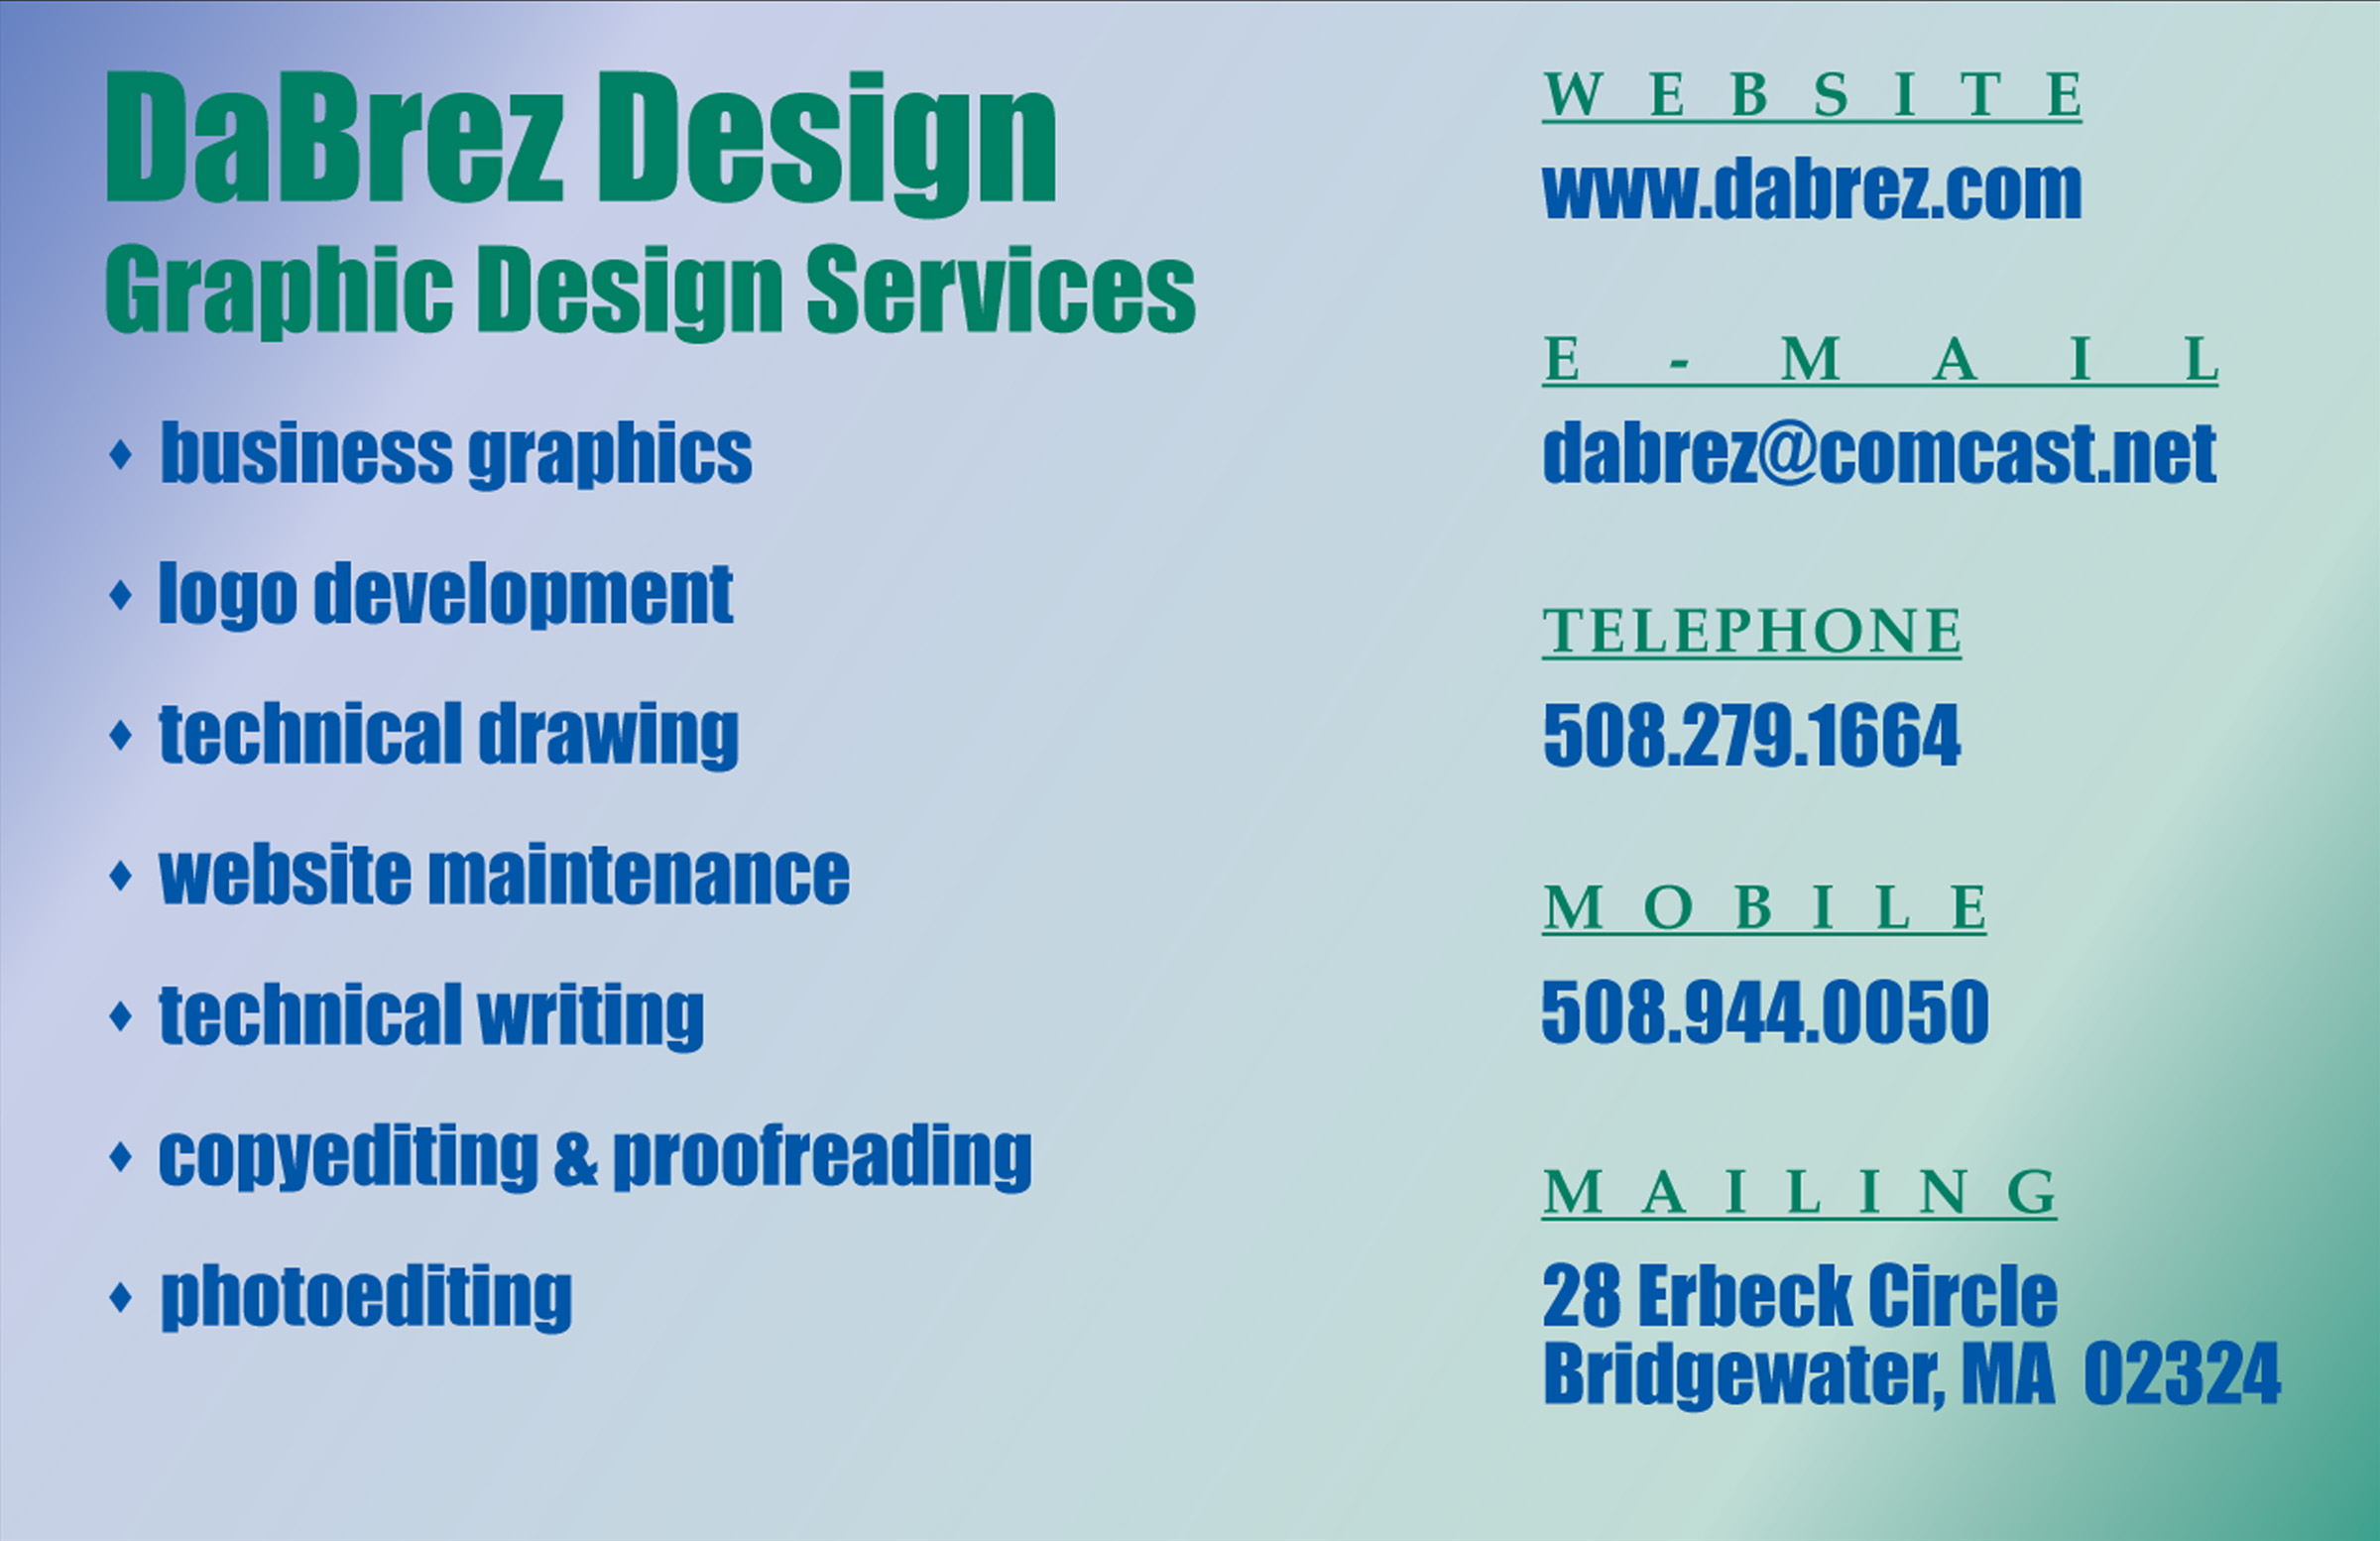 Ways to contact DaBrez Design